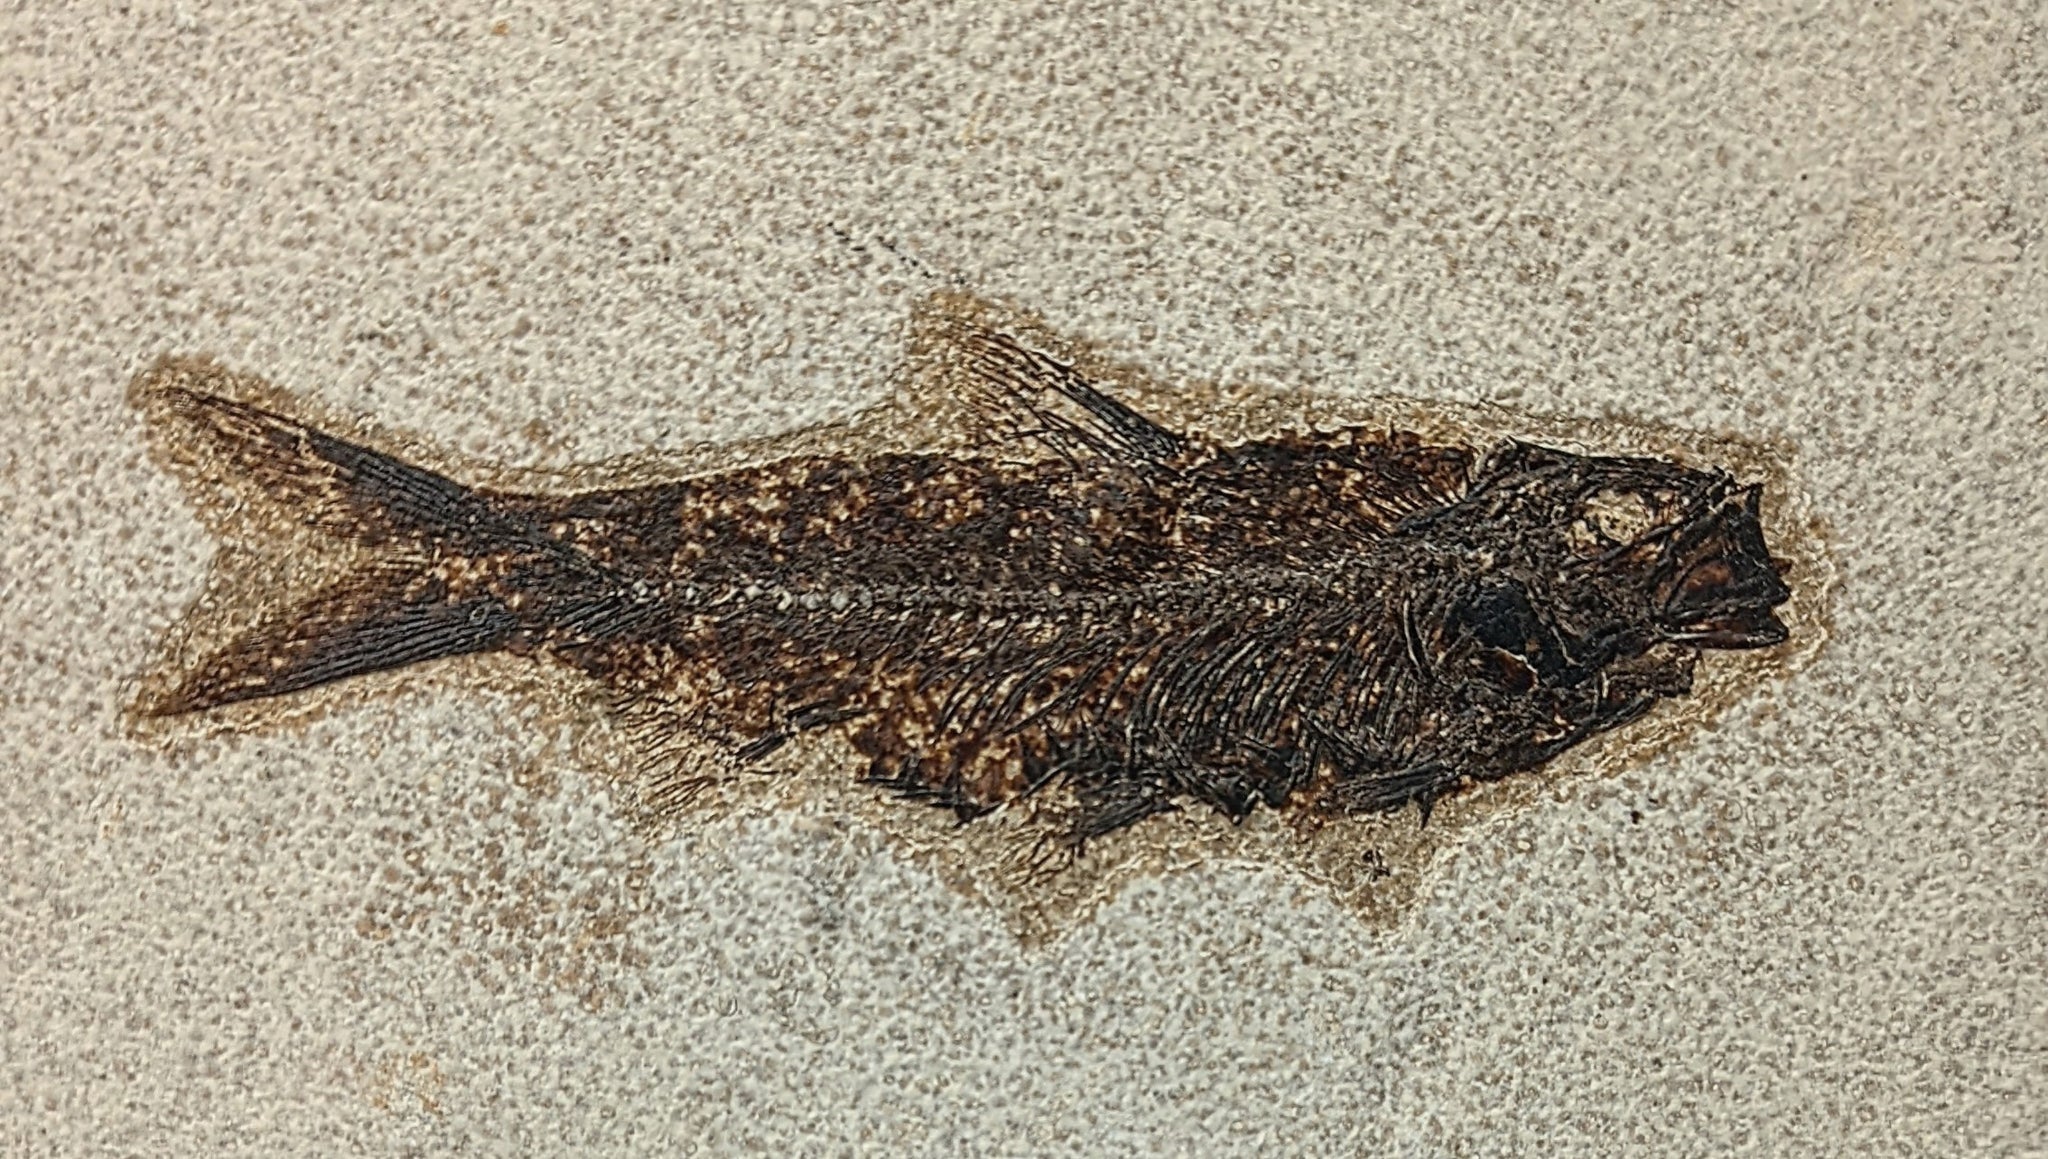 Knightia Eoceana Framed Fish Fossil